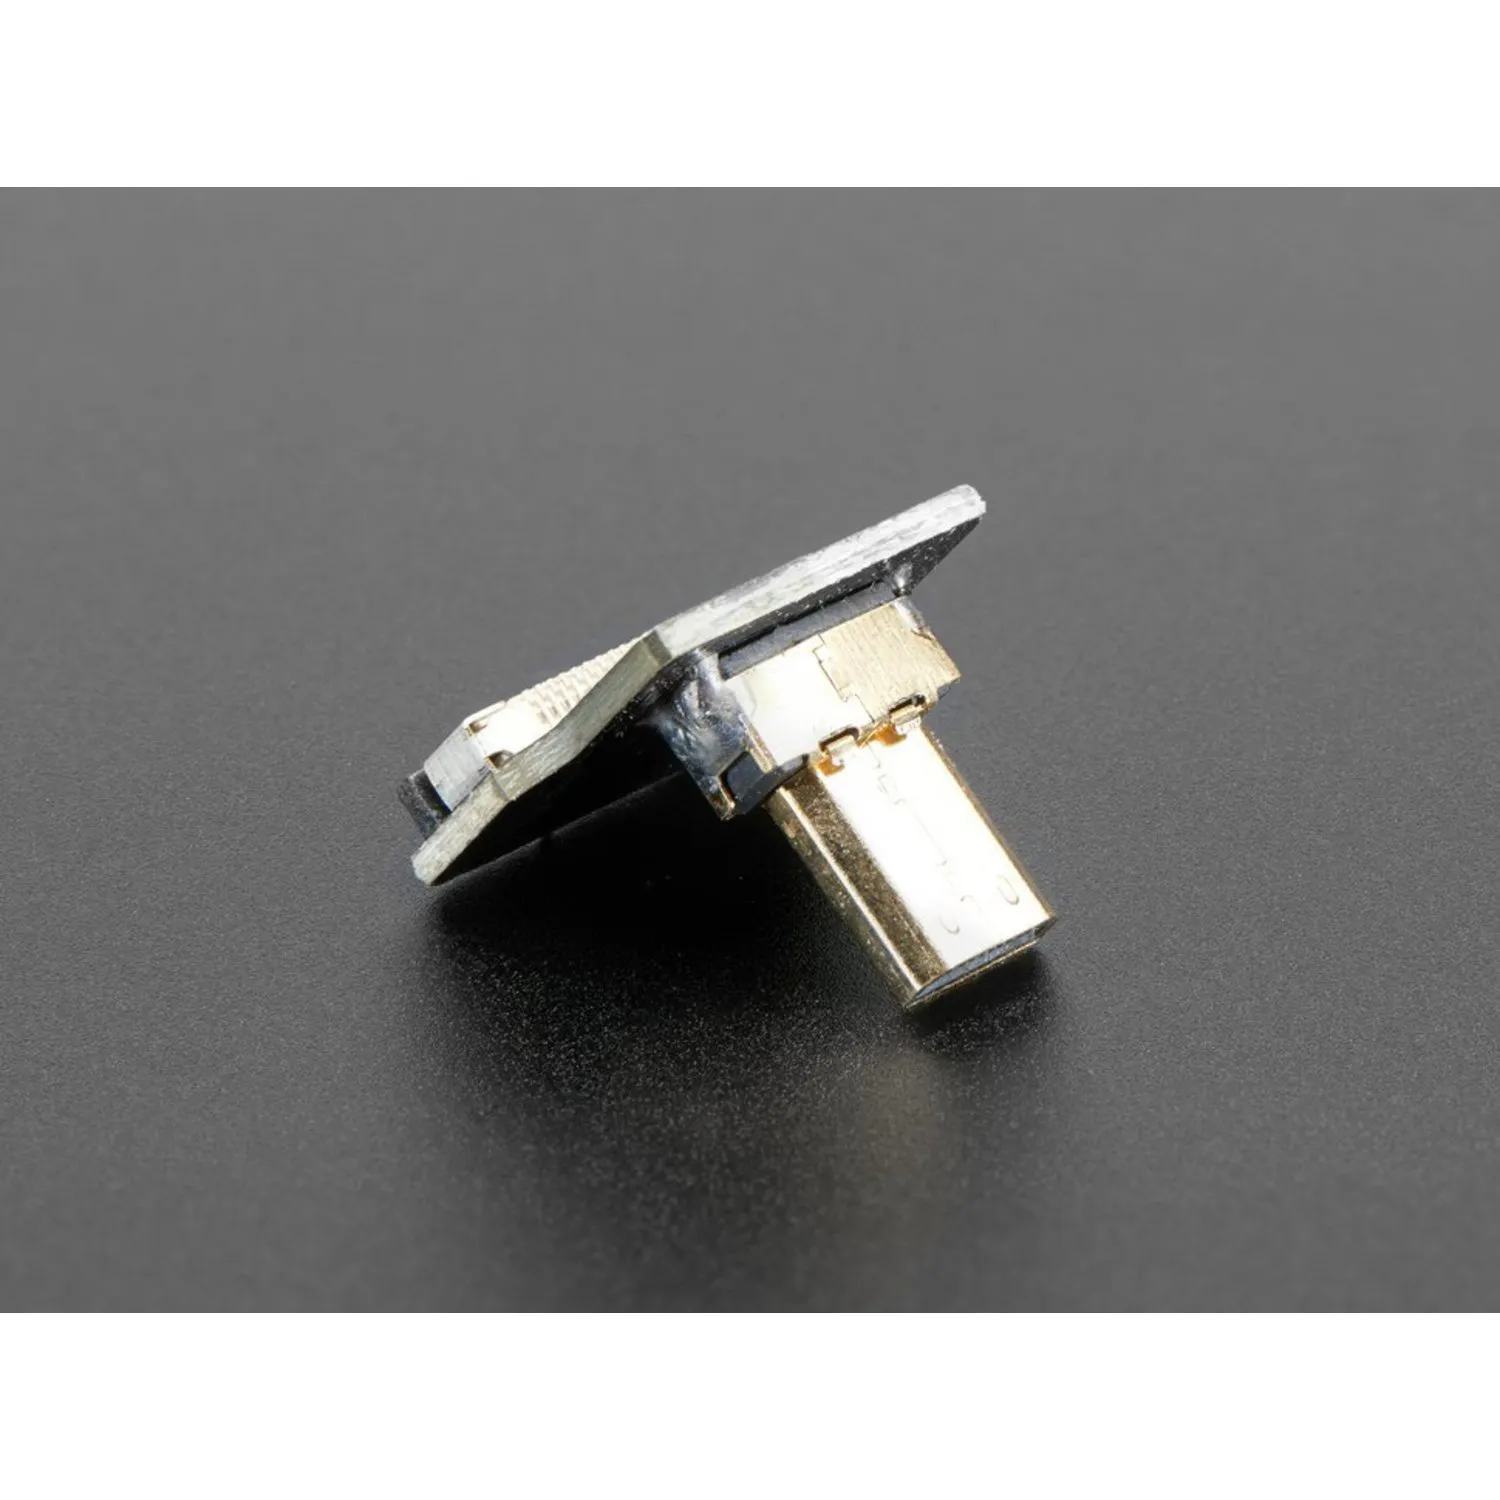 Photo of DIY HDMI Cable Parts - Right Angle (R Bend) Micro HDMI Plug